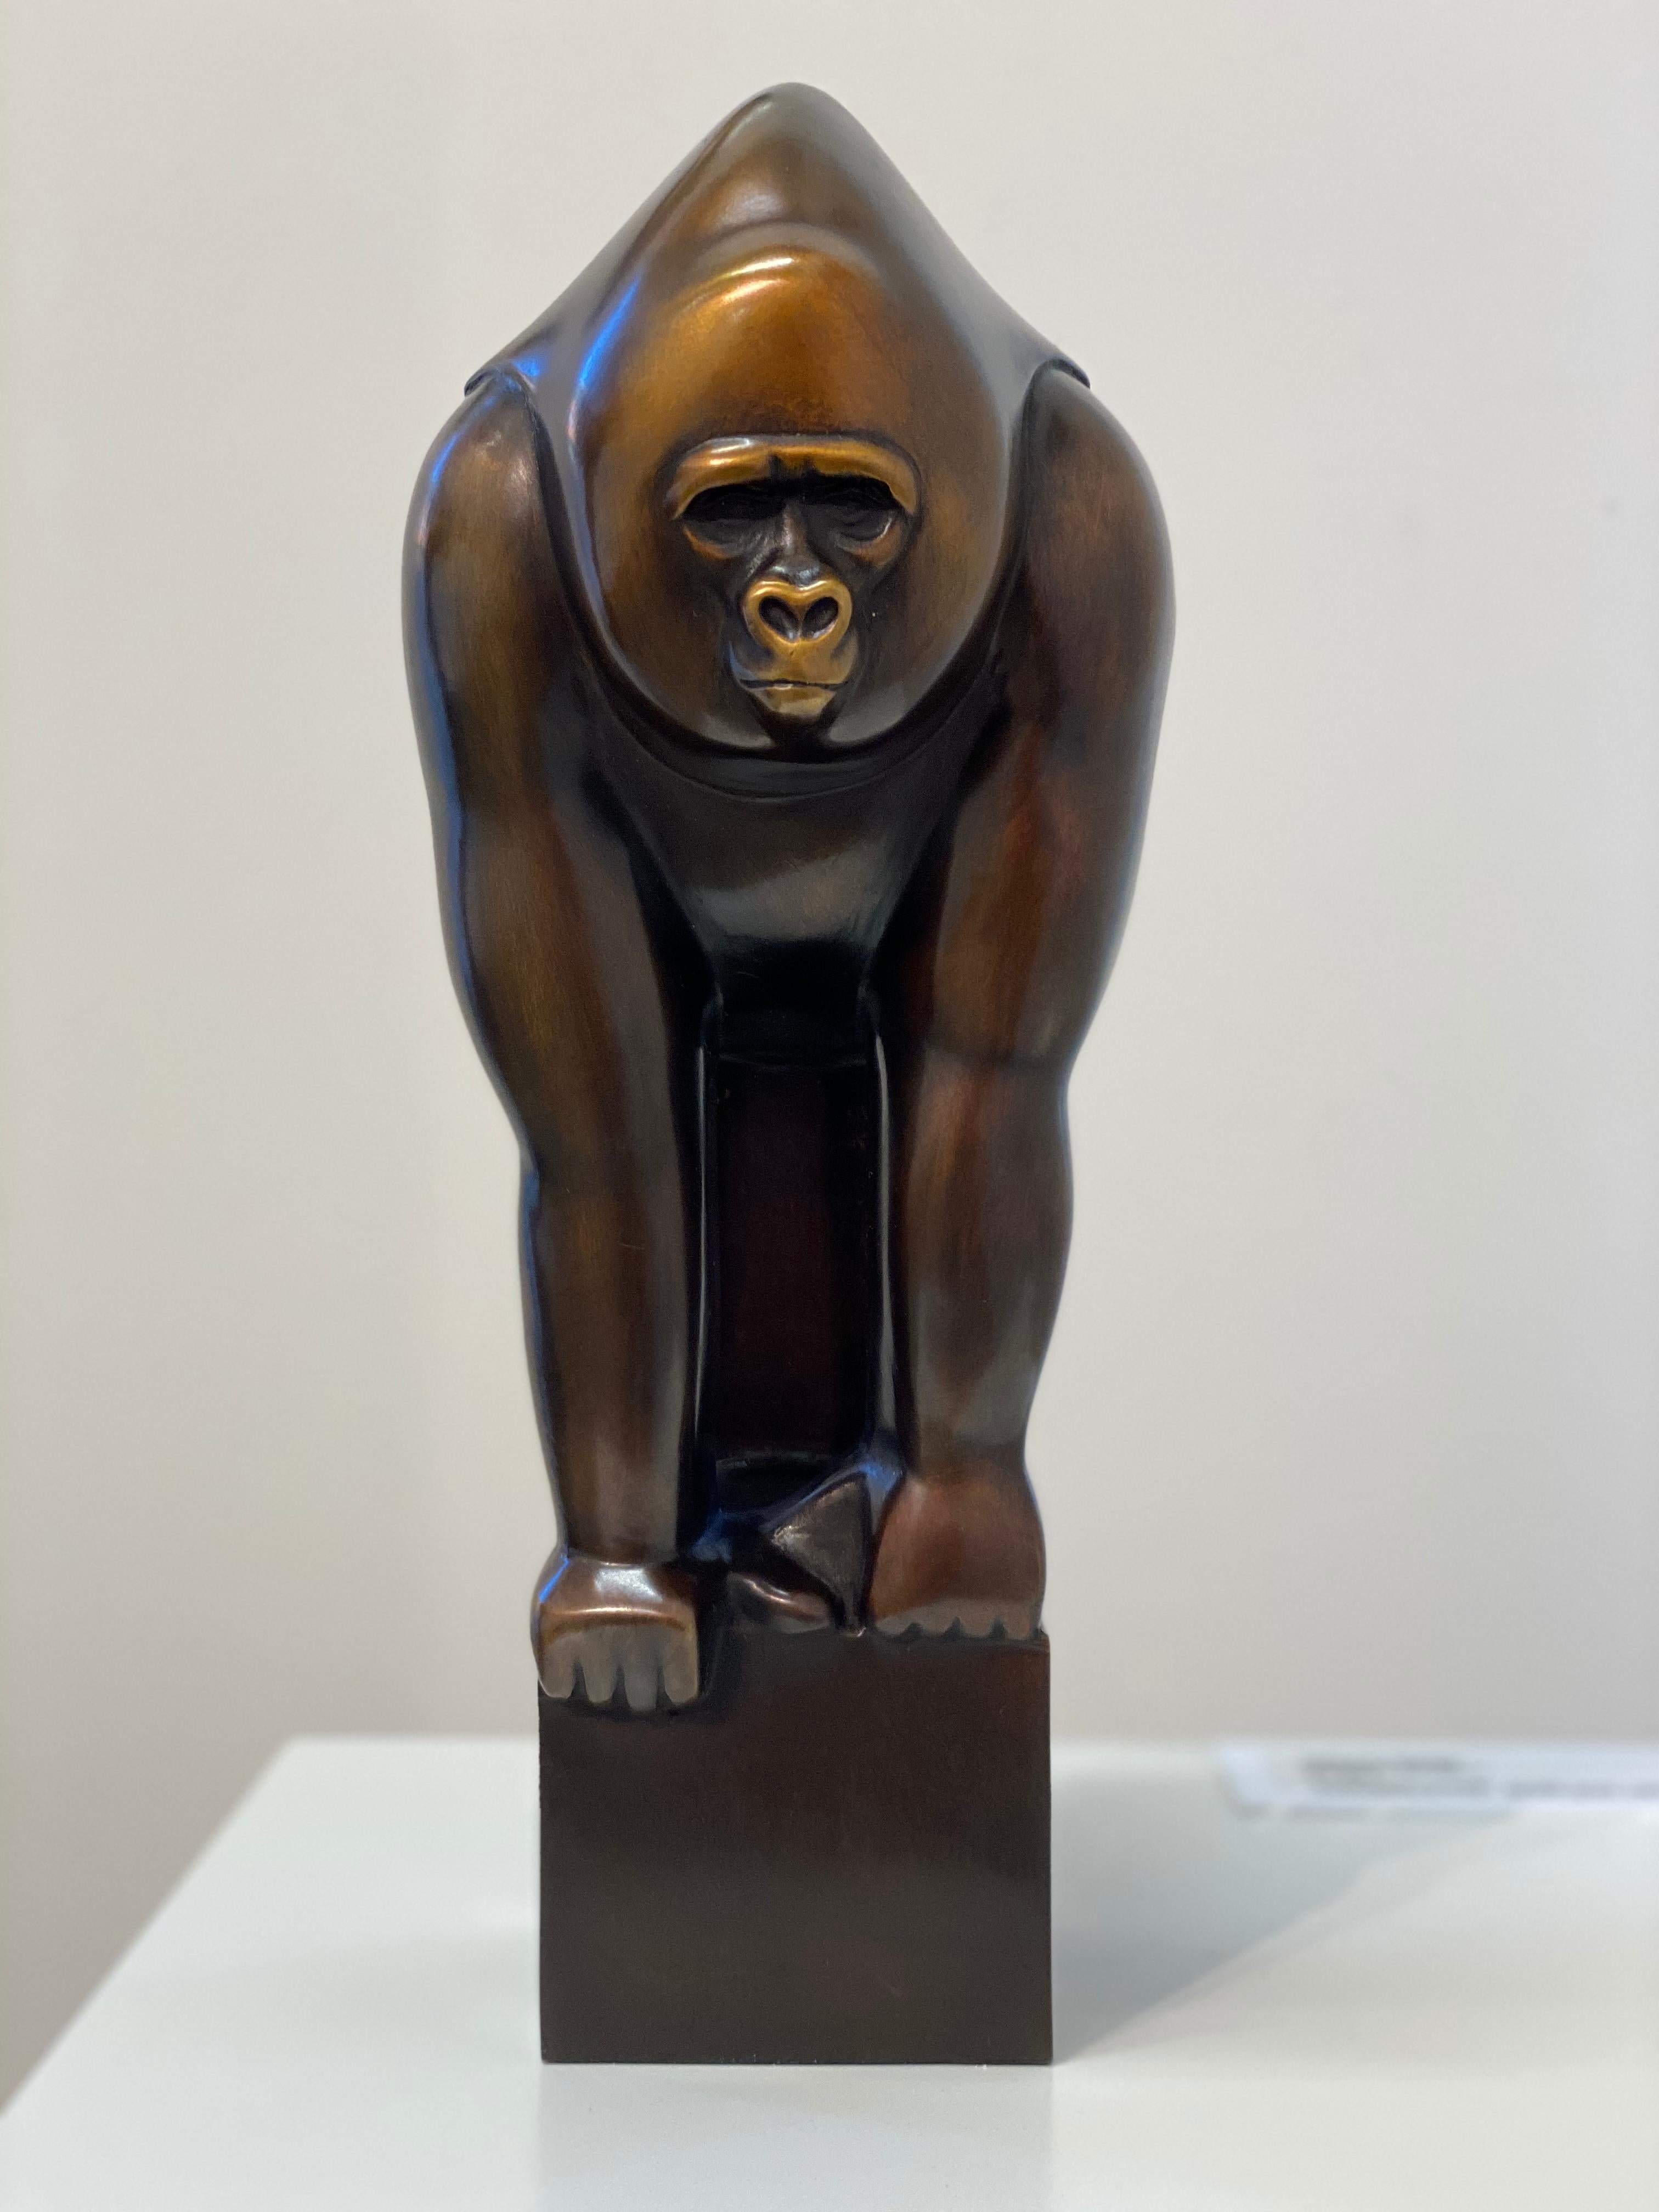 Frans van Straaten Figurative Sculpture - Gorilla- 21st Century Dutch Bronze sculpture of a Gorilla